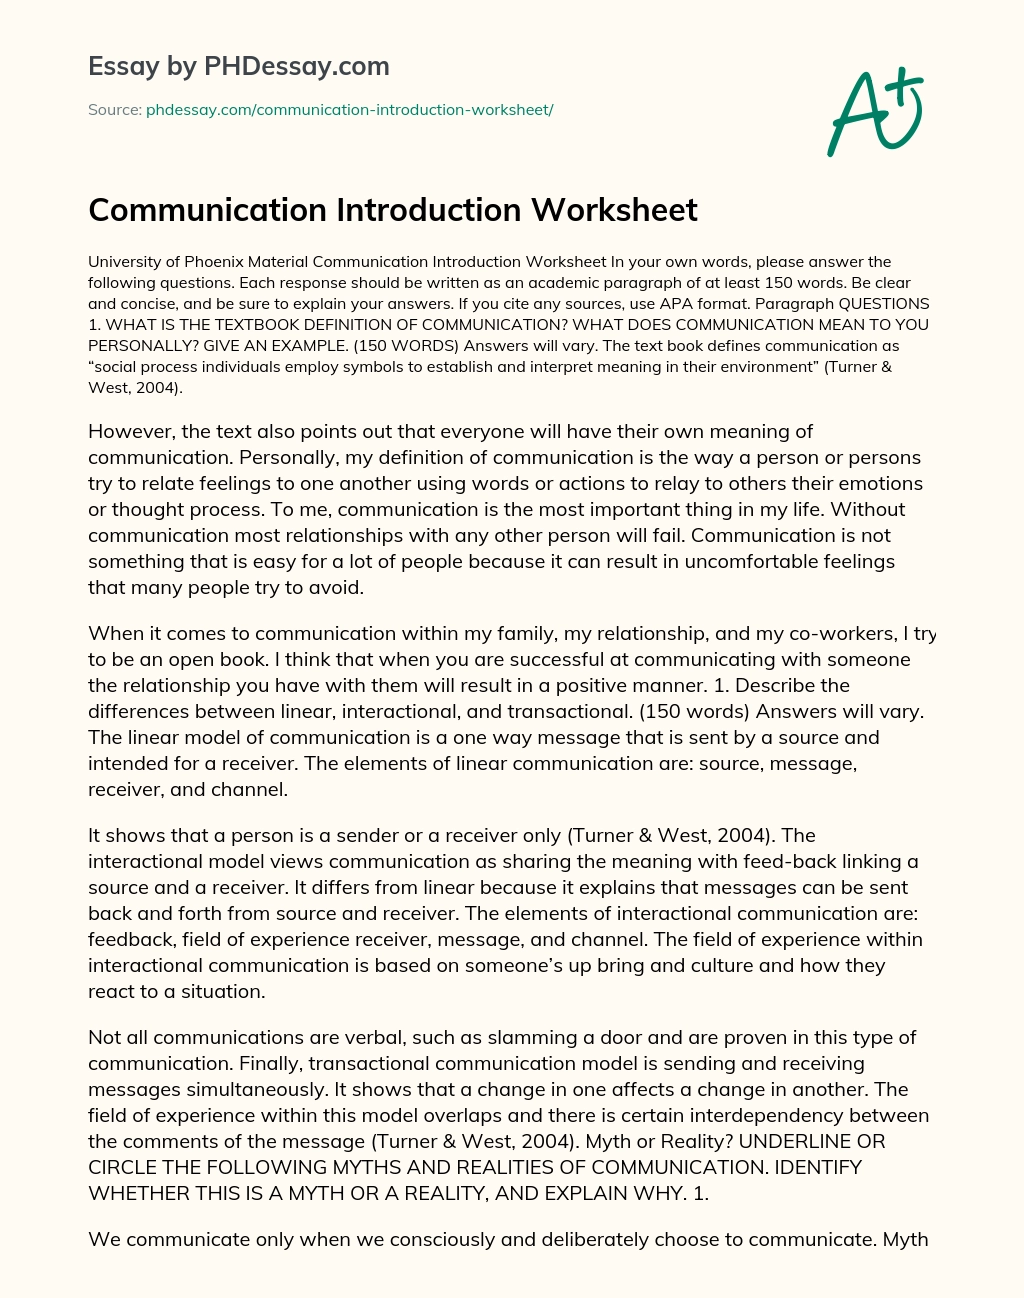 Communication Introduction Worksheet essay